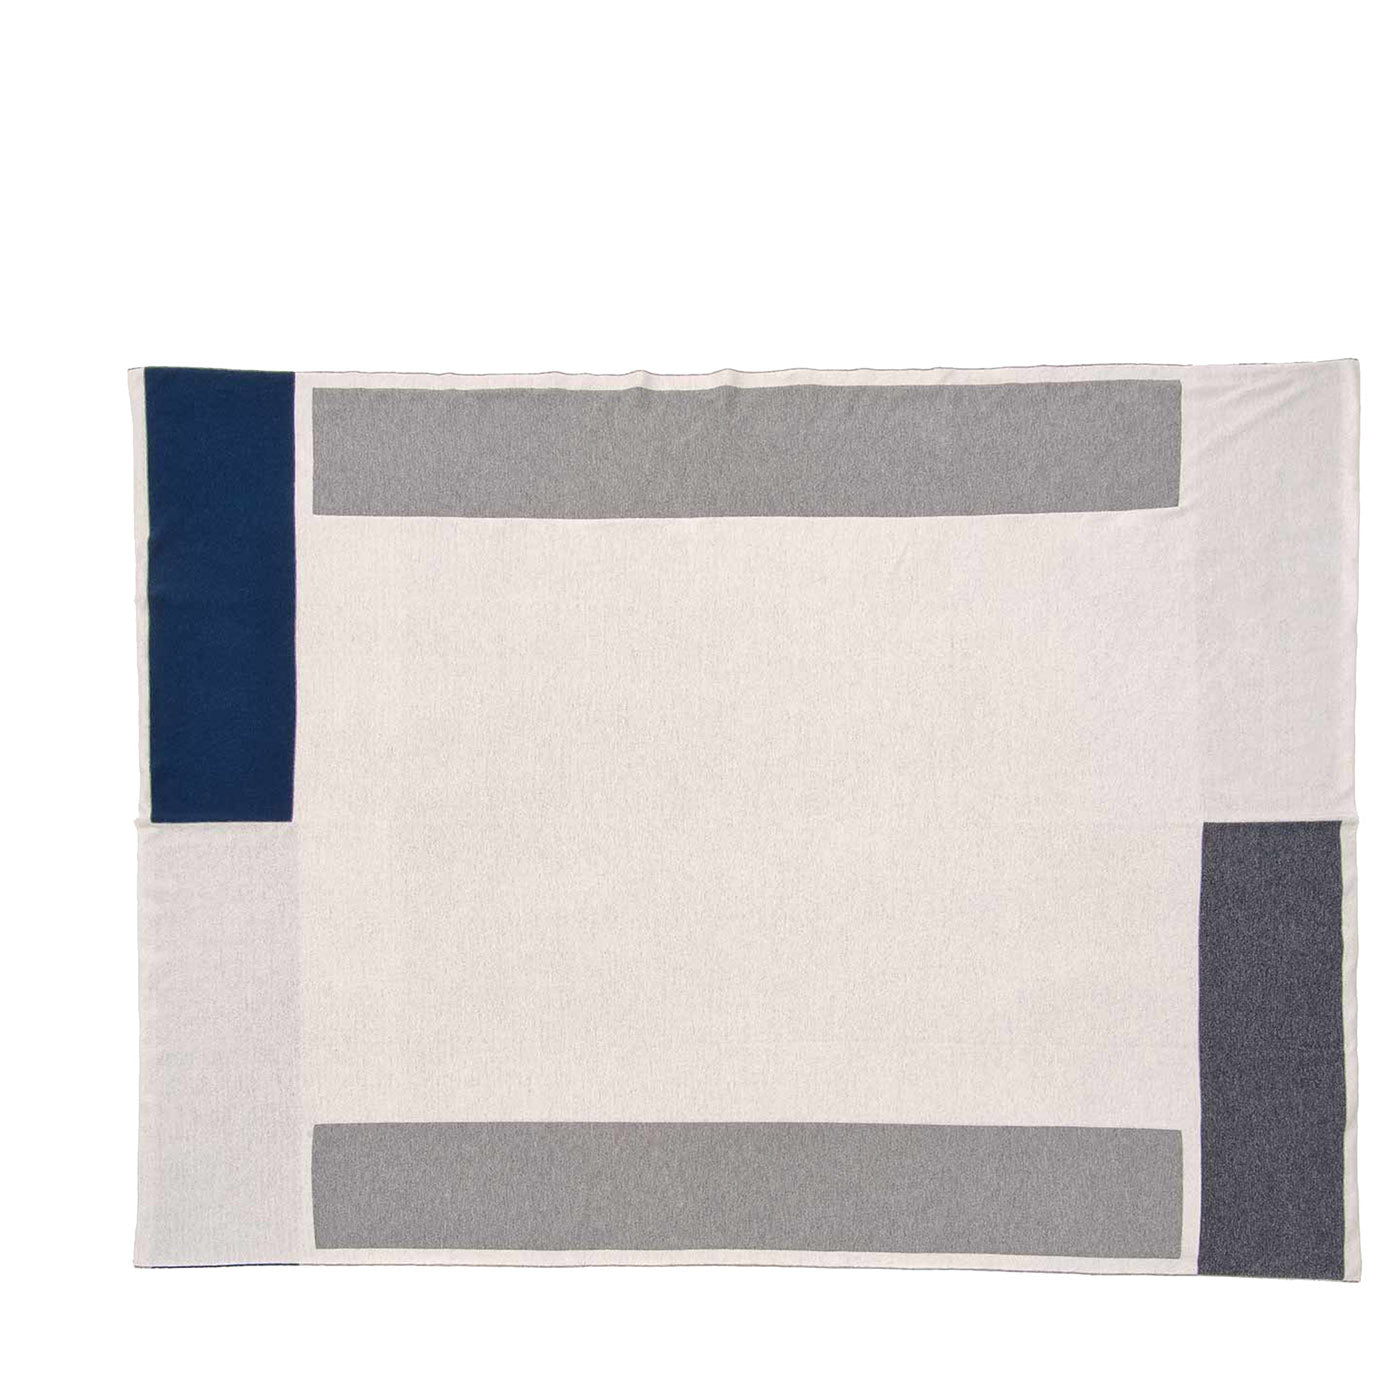 Segments of Frame White/Blue/Gray Blanket - Main view